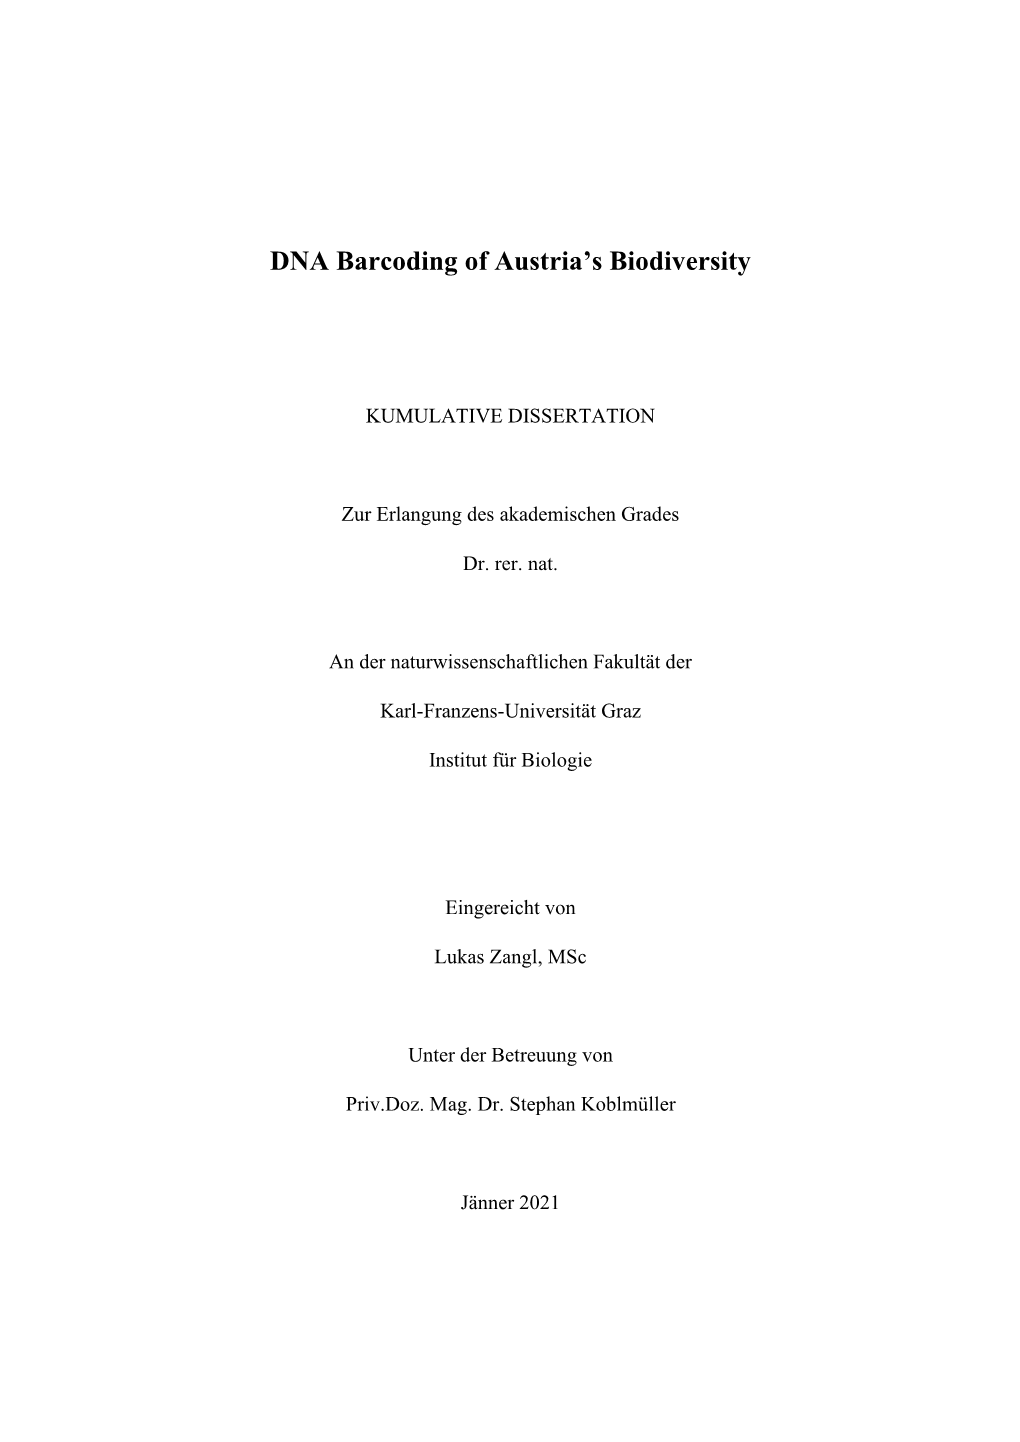 DNA Barcoding of Austria's Biodiversity